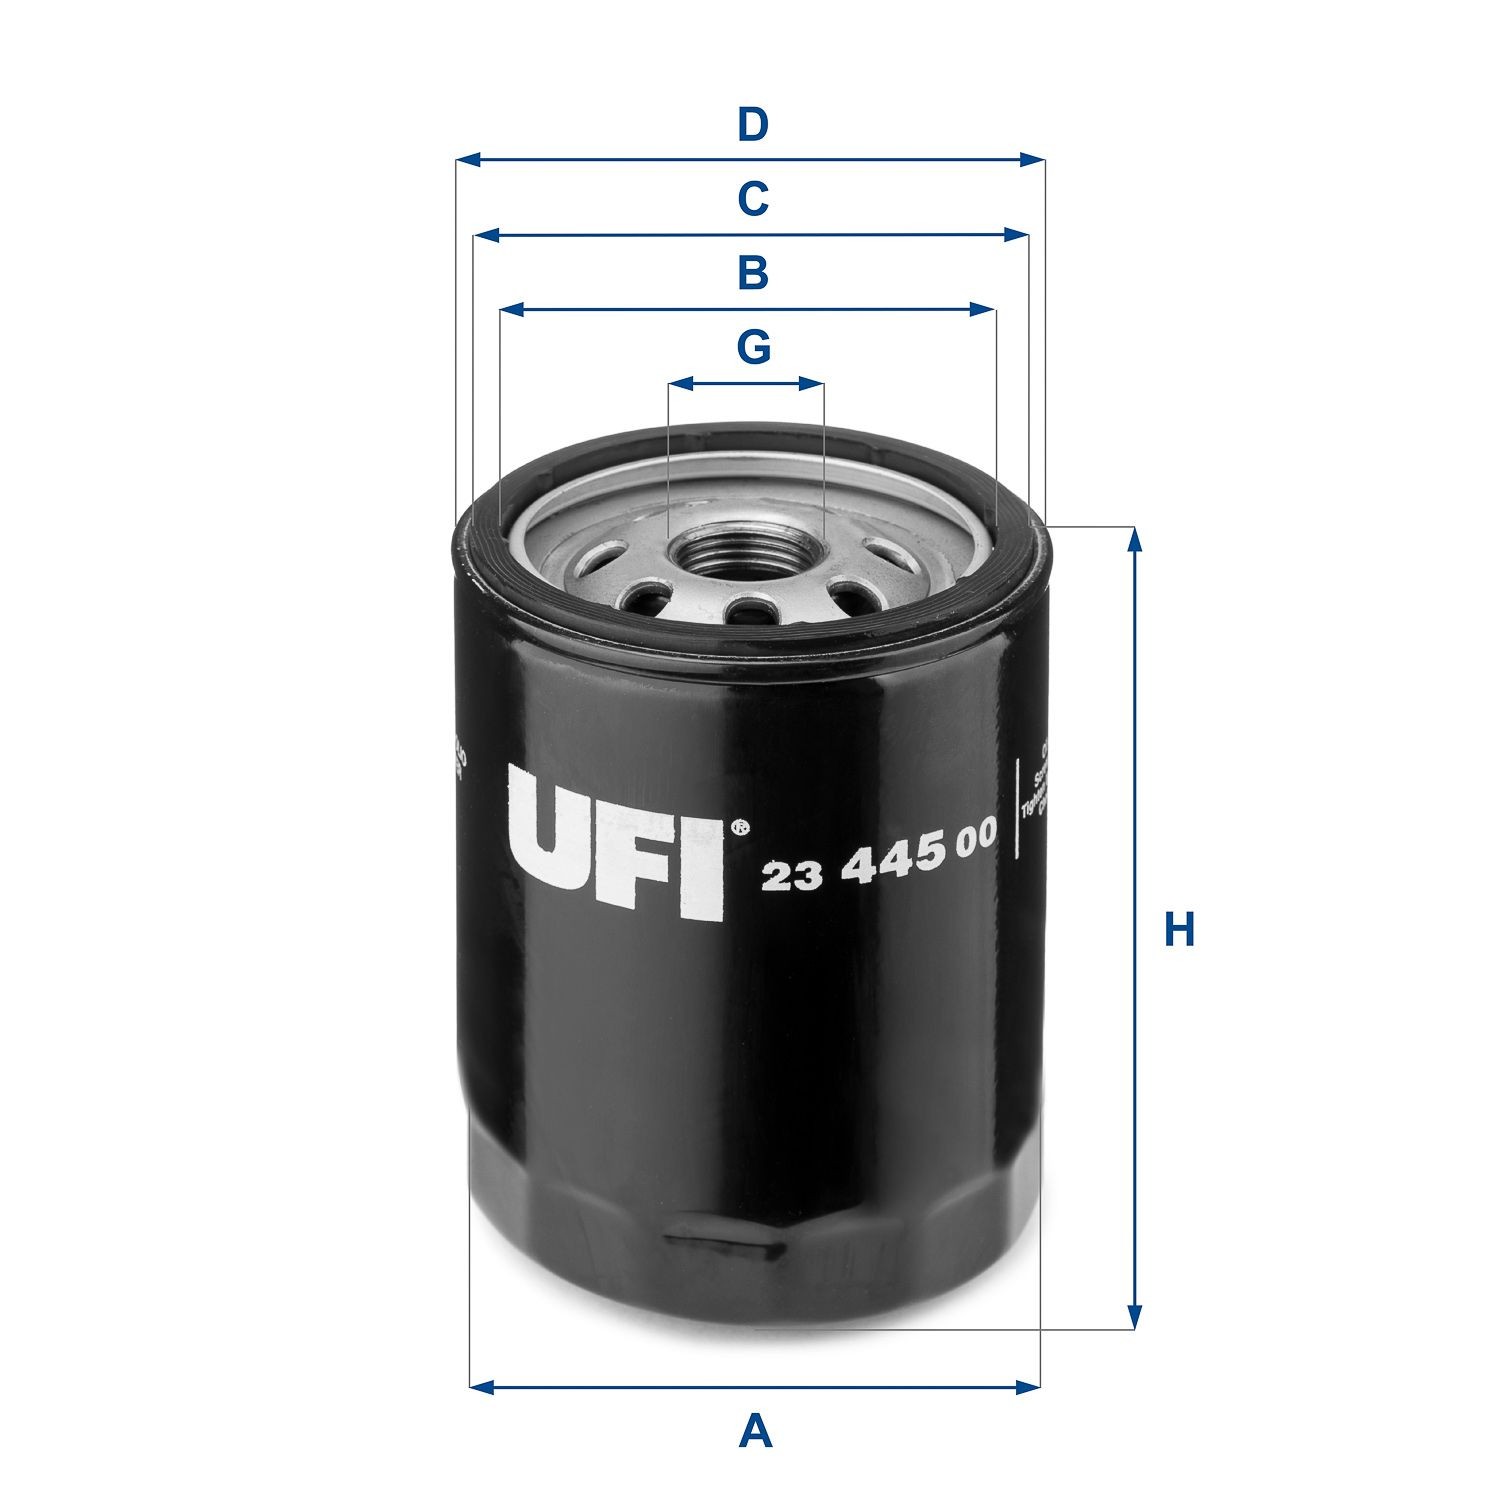 UFI 23.445.00 Motorölfilter 3/4-16 UNF, Original VAICO Qualität, mit einem Rücklaufsperrventil, Anschraubfilter